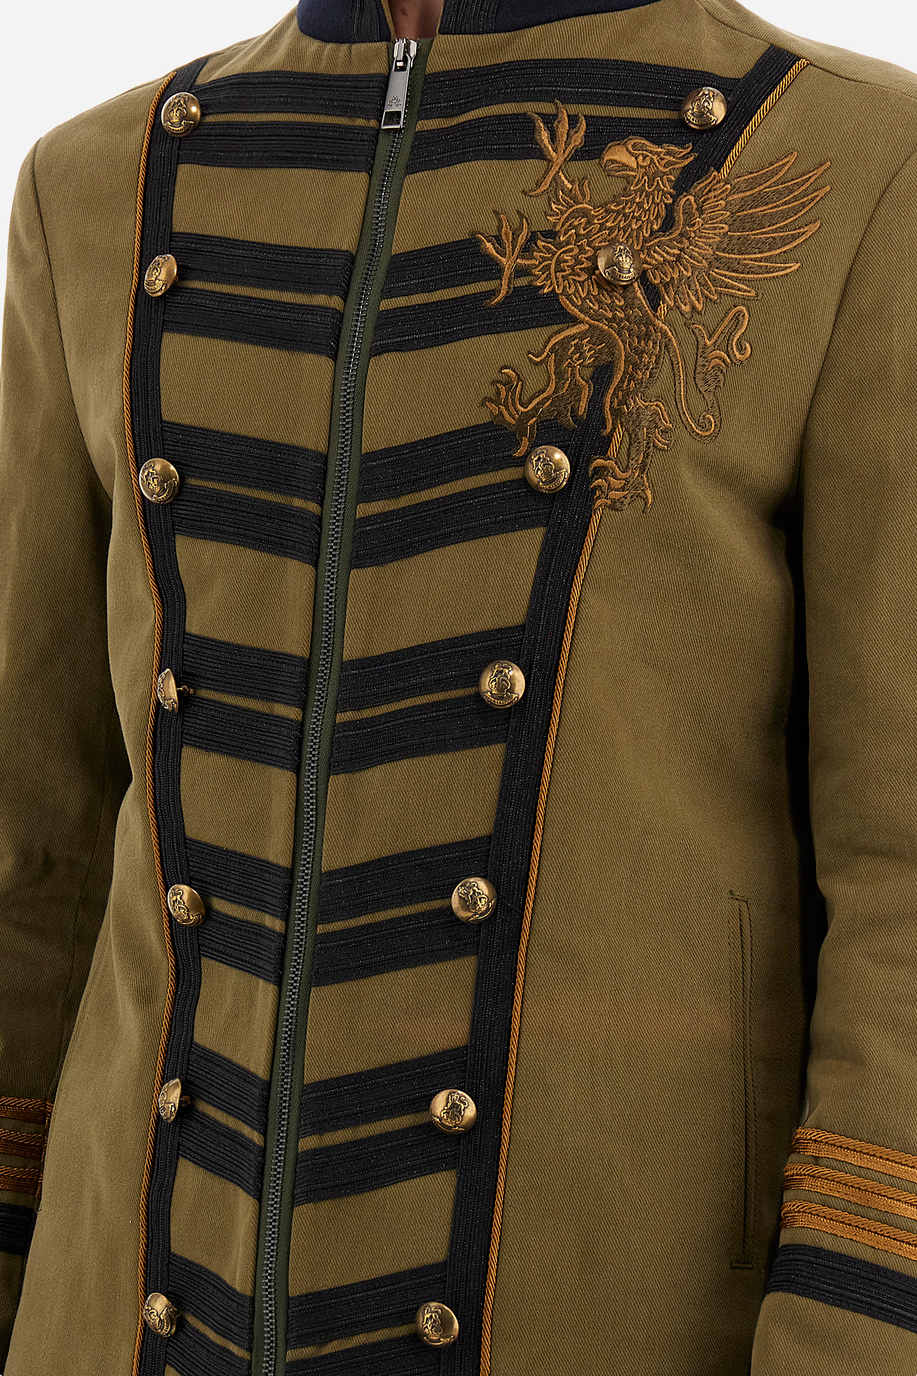 Man regular fit jacket - Wortham - Guards - England | La Martina - Official Online Shop